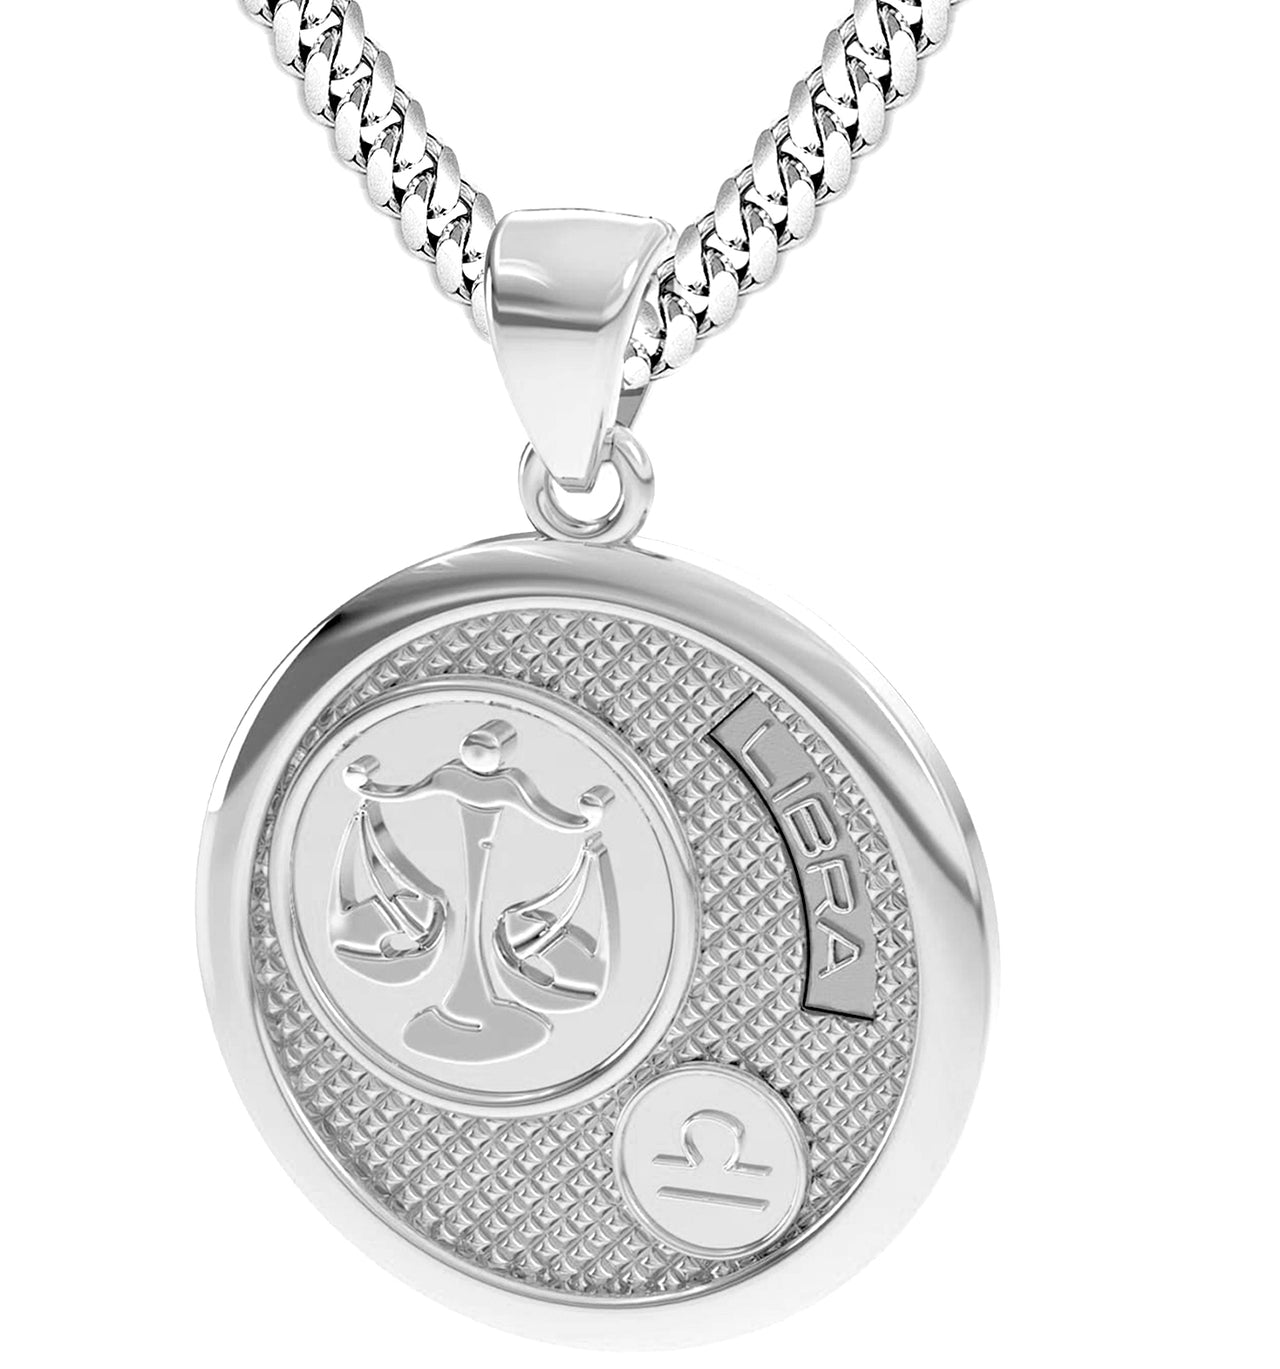 Men's 925 Sterling Silver Round Libra Zodiac Polished Finish Pendant Necklace, 33mm